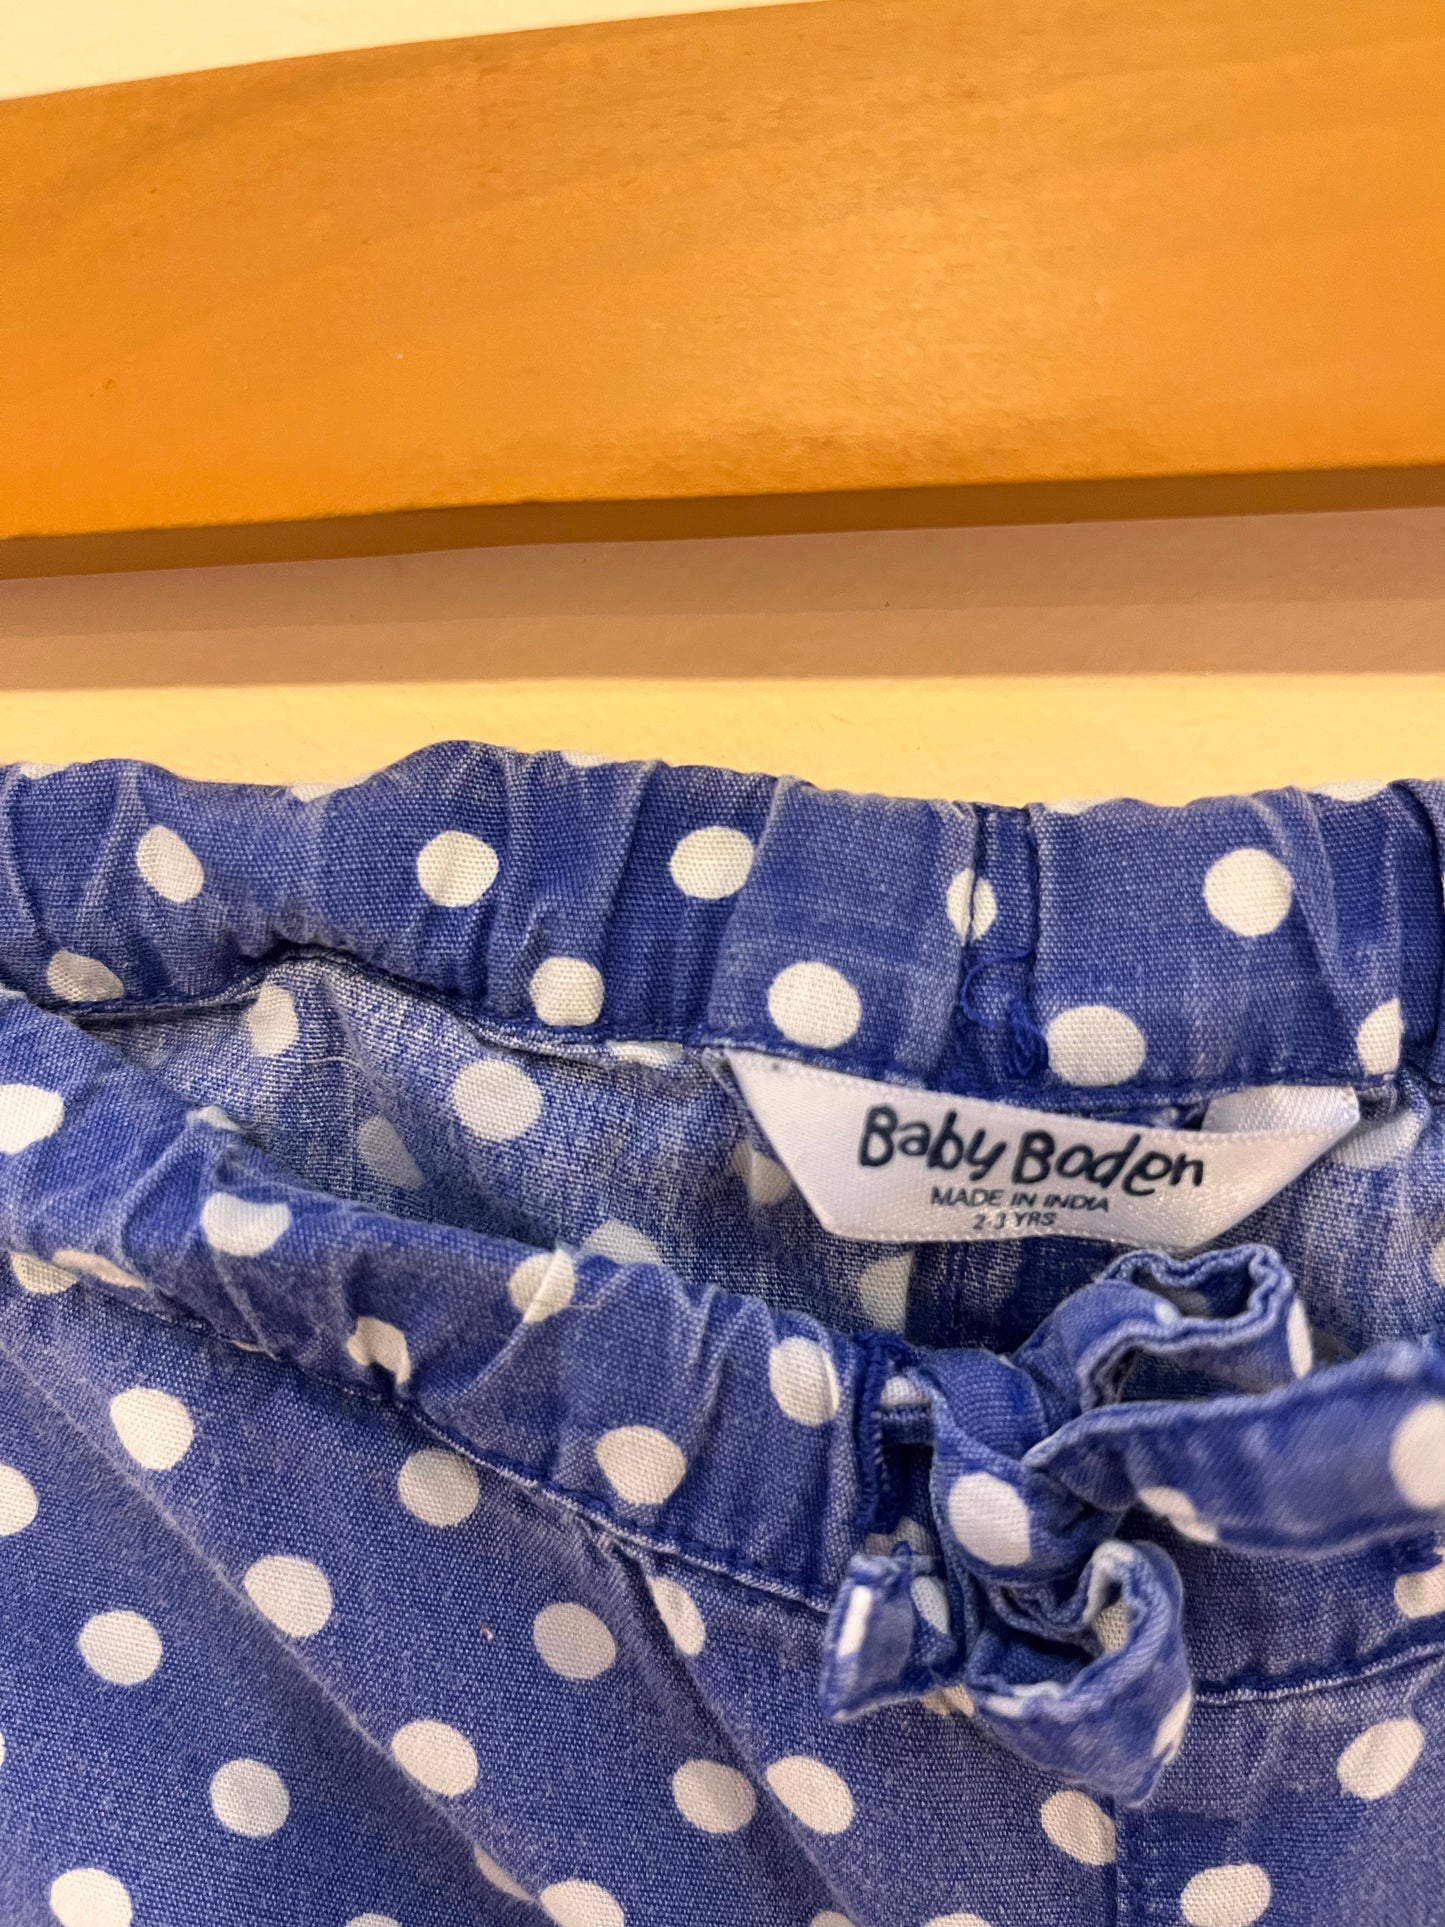 Baby Boden Polka-Dot Capri Shorts (3T)